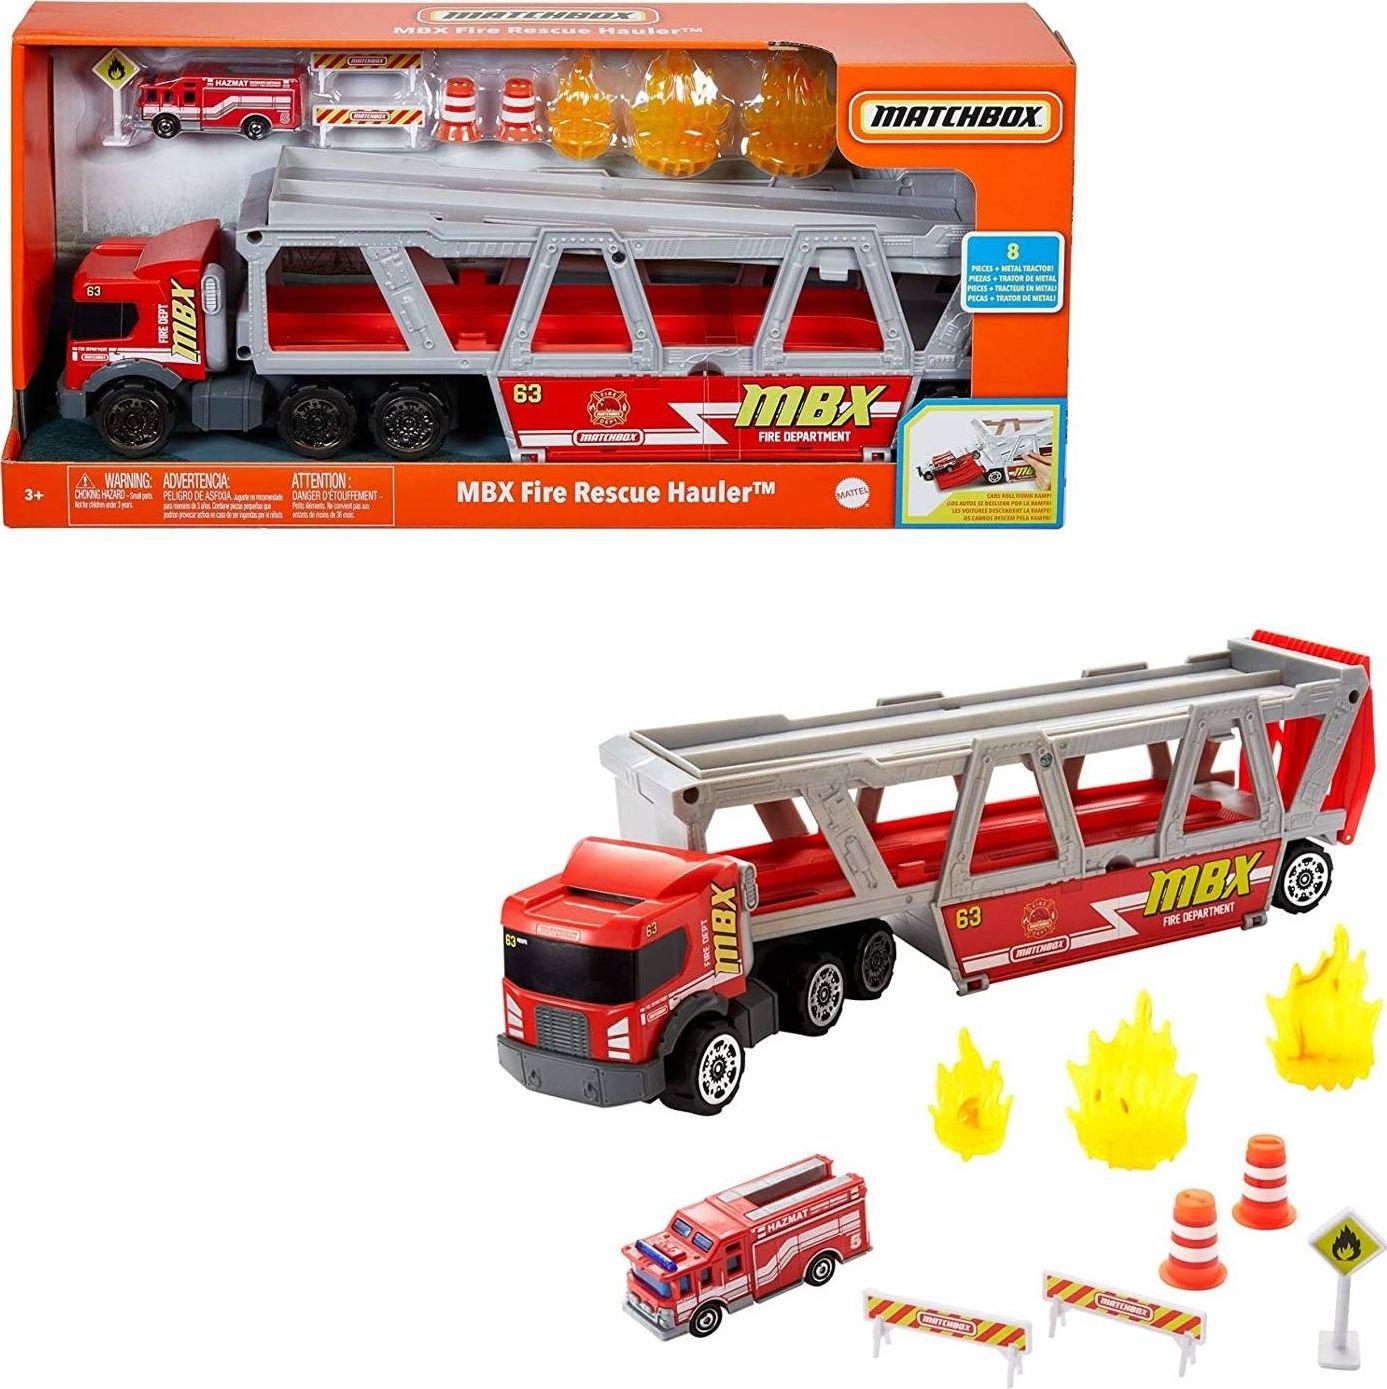 Vehicul Mattel Matchbox Transporter Camion de pompieri